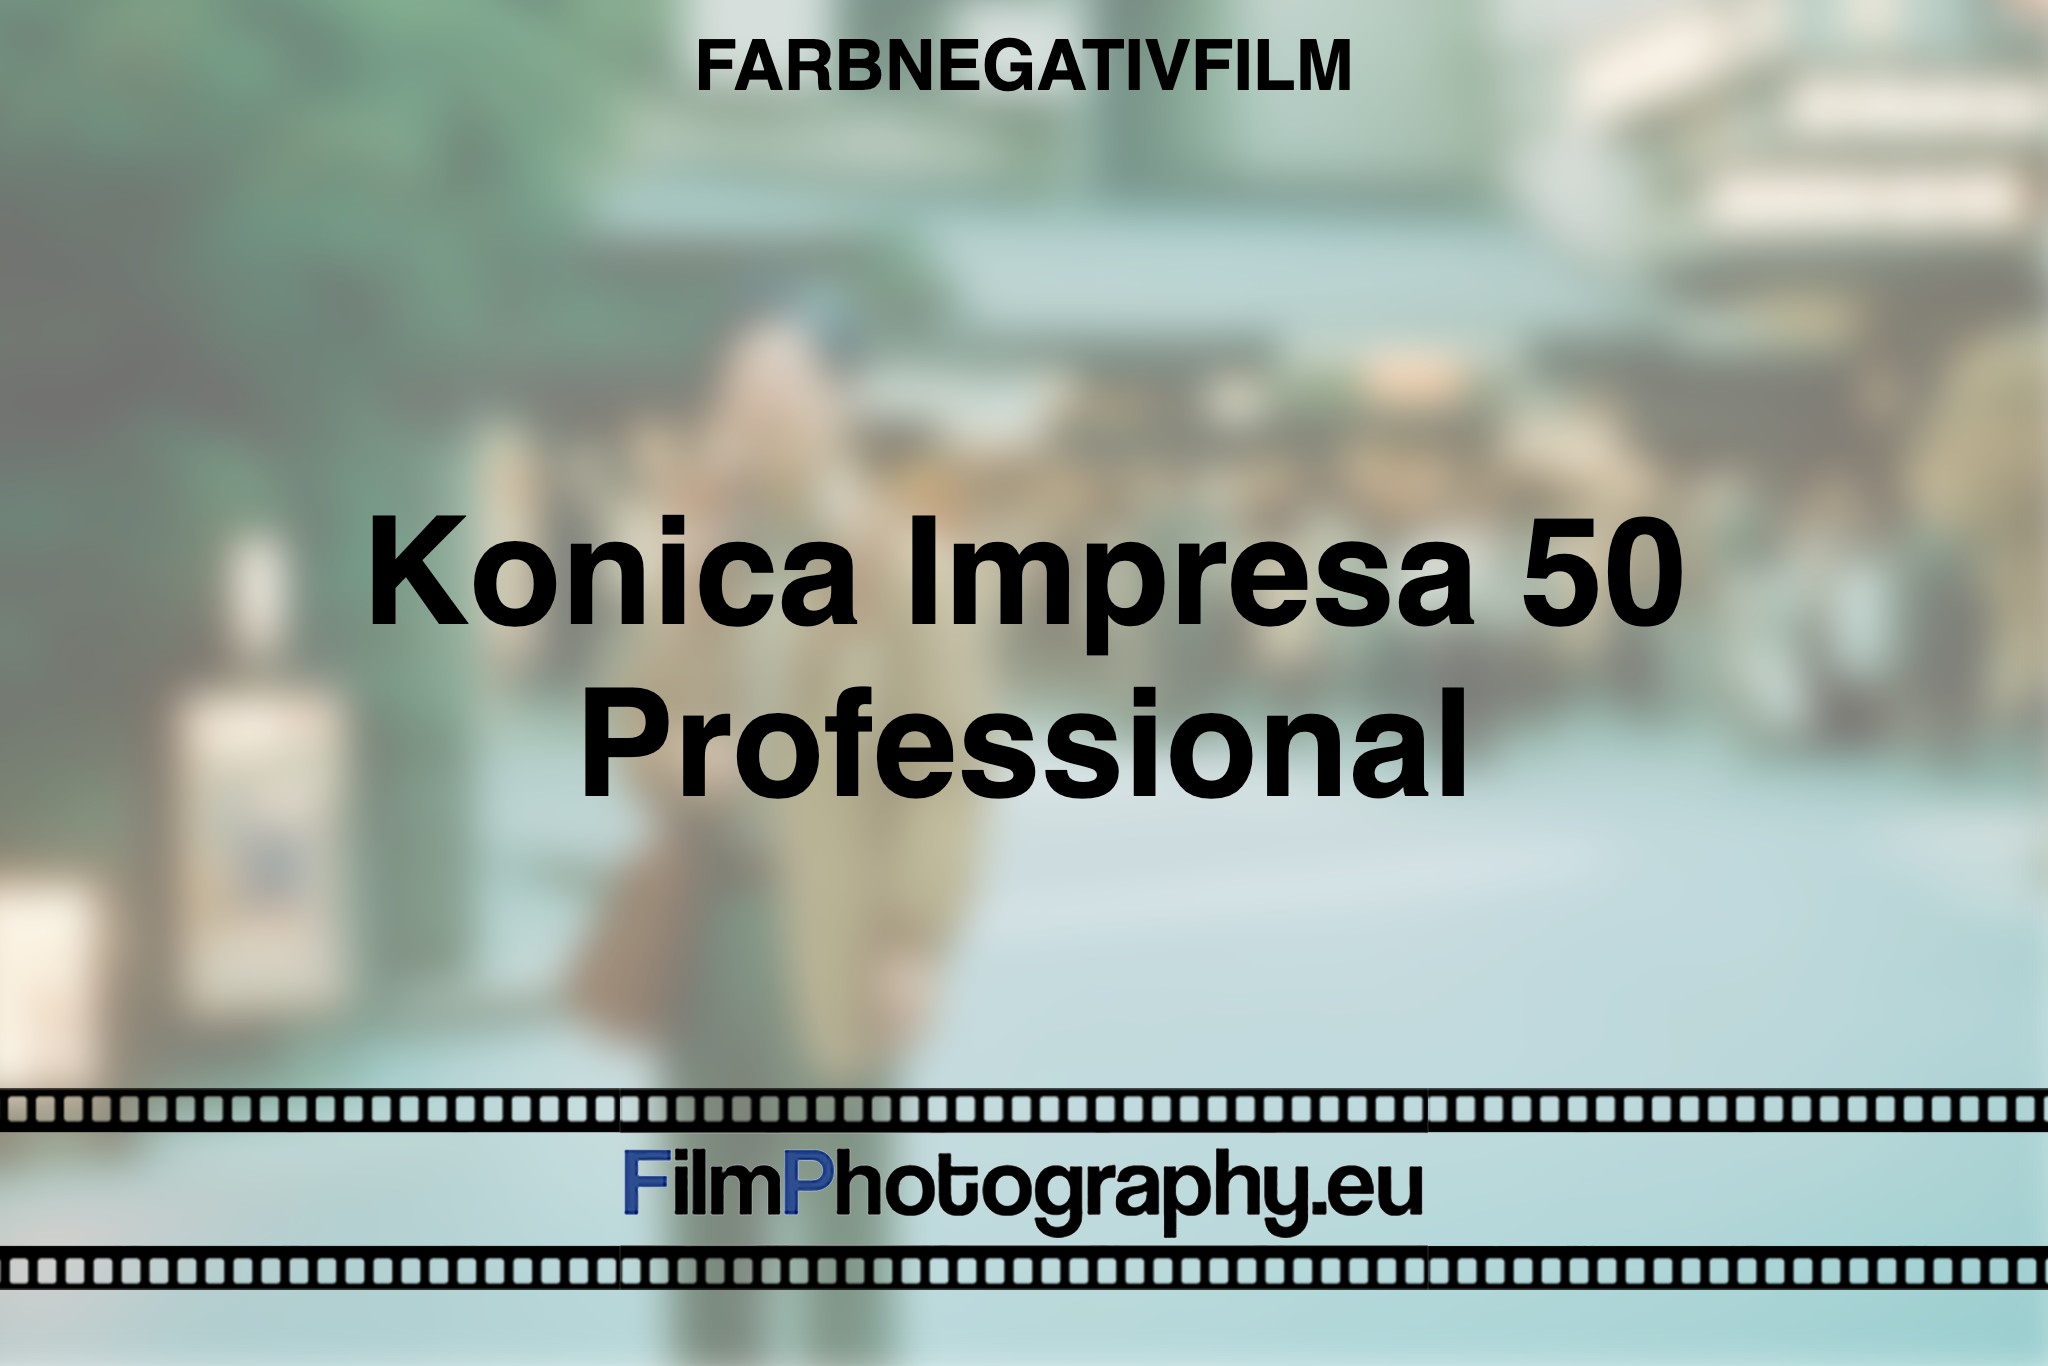 konica-impresa-50-professional-farbnegativfilm-bnv